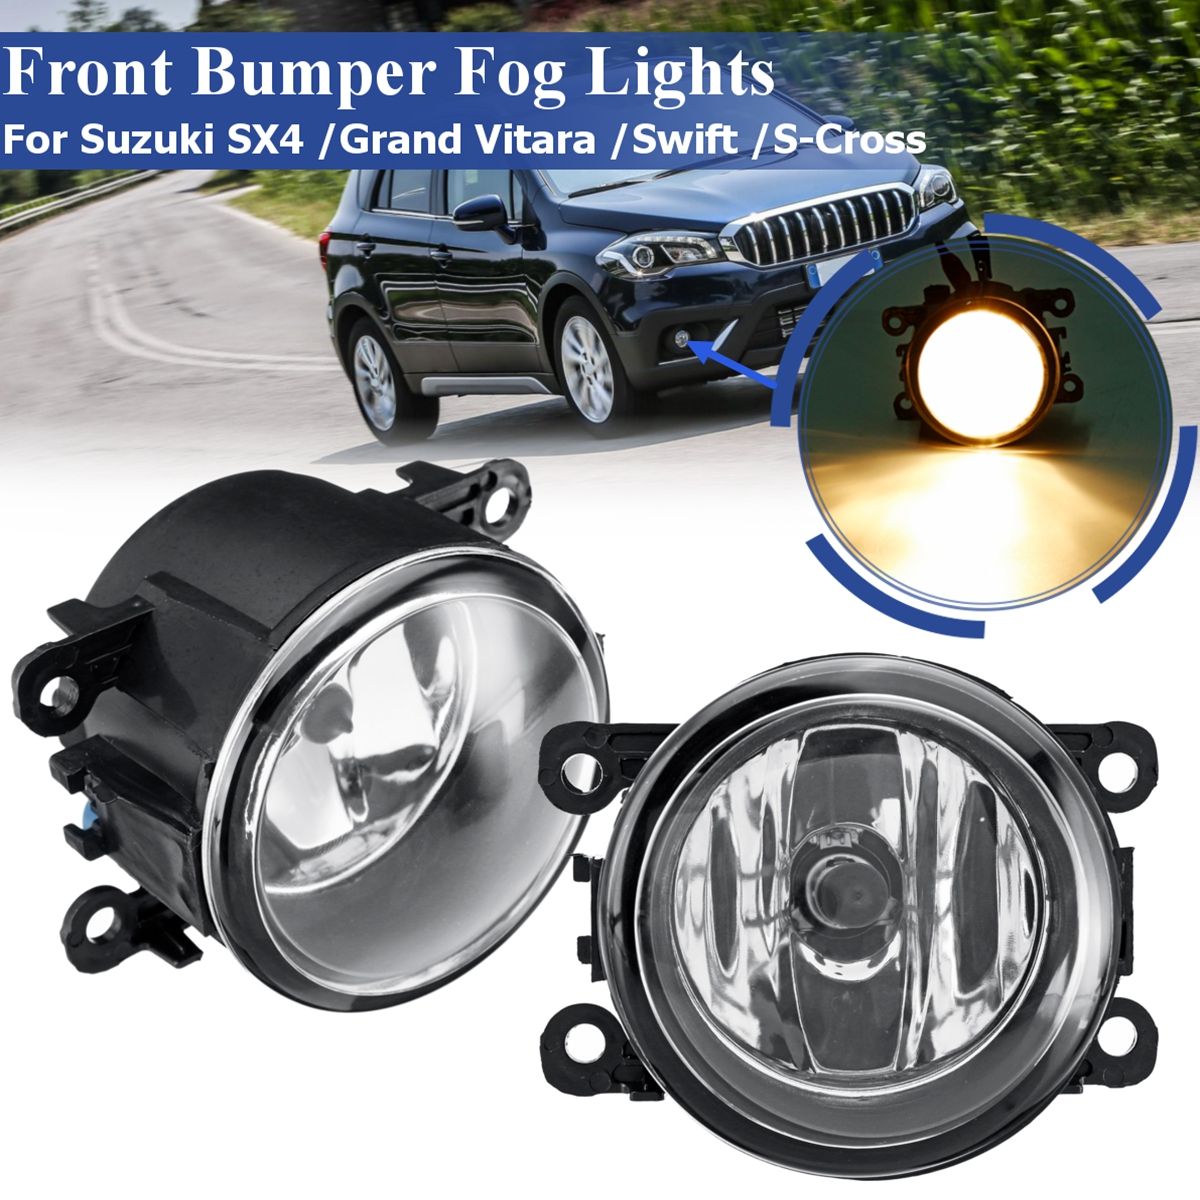 Car-Front-Bumper-Fog-Light-Lamp-with-H11-Bulb-for-Suzuki-SX4-Grand-Vitara-Swift-S-Cross-Alto-1407629